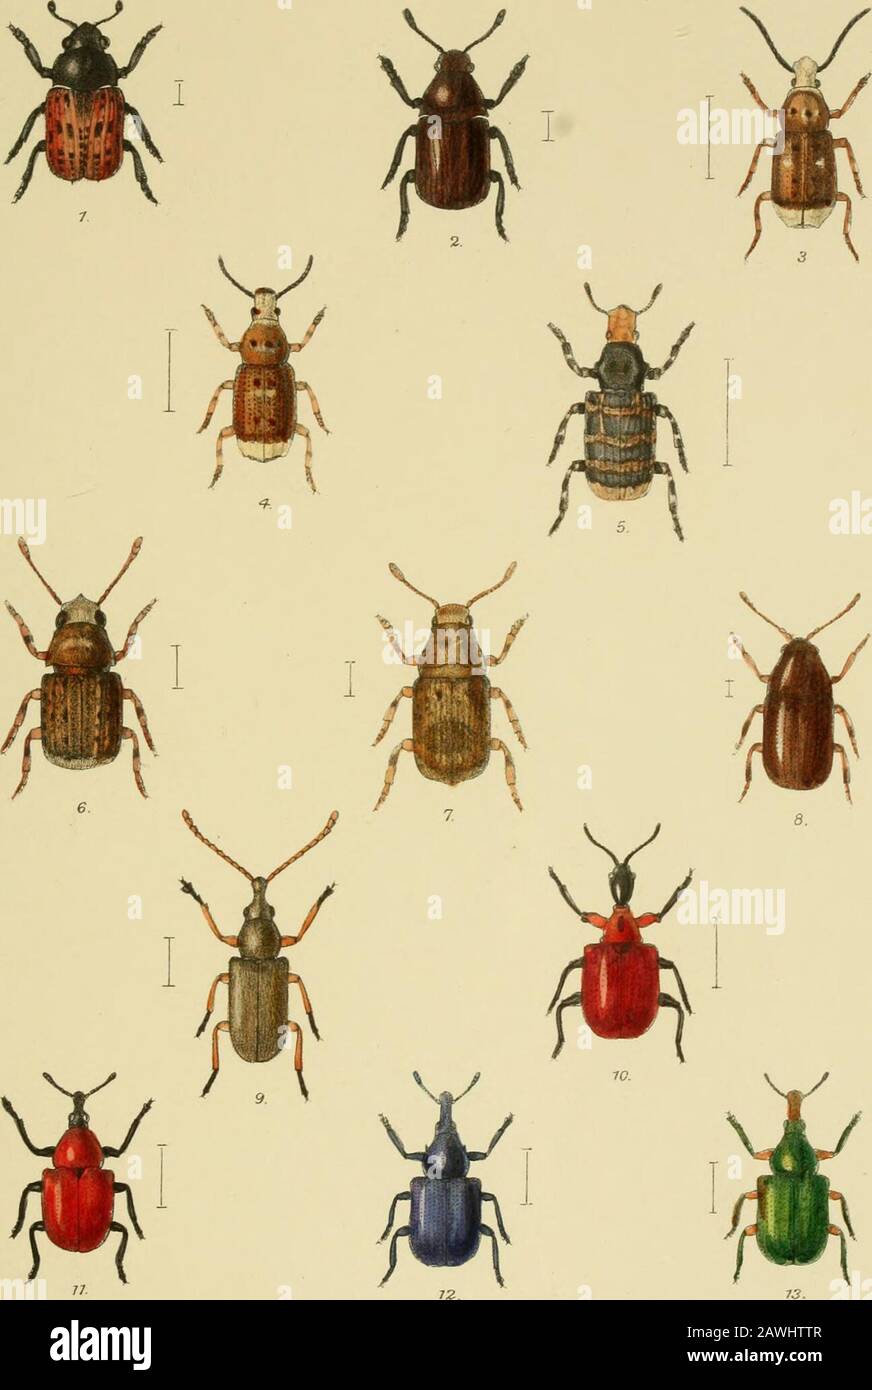 The Coleoptera of the British islandsA descriptive account of the families, genera, and species indigenous to Great Britain and Ireland, with notes as to localities, habitats, etc . R Mor|,an.,del. etlith, ViaceatBrooks Day&Son^Imp. L-lleeve & C^London. HA ITY PLATE CLII. Fig. 1. Brachytarsus fasciatus, Forst. 2. „ varius, F. 3. Macrocephalus (Anthribus) albinns, L., male. 4. „ „ „ female. 5. Platyrrhinus latirostris, F. 6. Tropideres uiveirostrisj F. 7. „ sepicola, F. 8. Clioragus Sheppardi, Klrhy. 9. Rhiuomacer attelaboides, F. 10. Apodevus corjli, L. 11. Attelabus curcnlionoides, F. 13. Byc Stock Photo